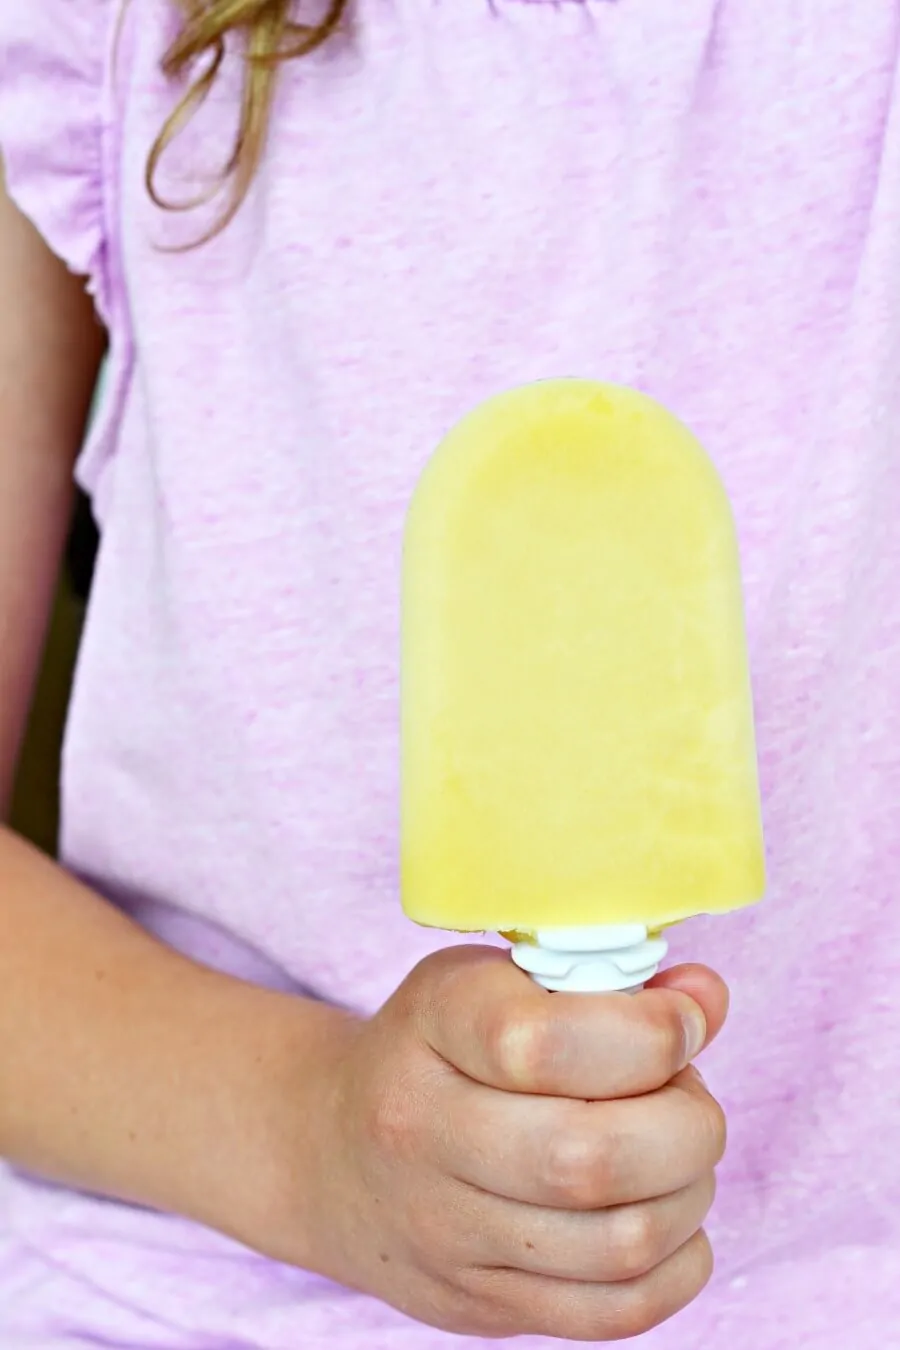 Immune boosting popsicle kids will love